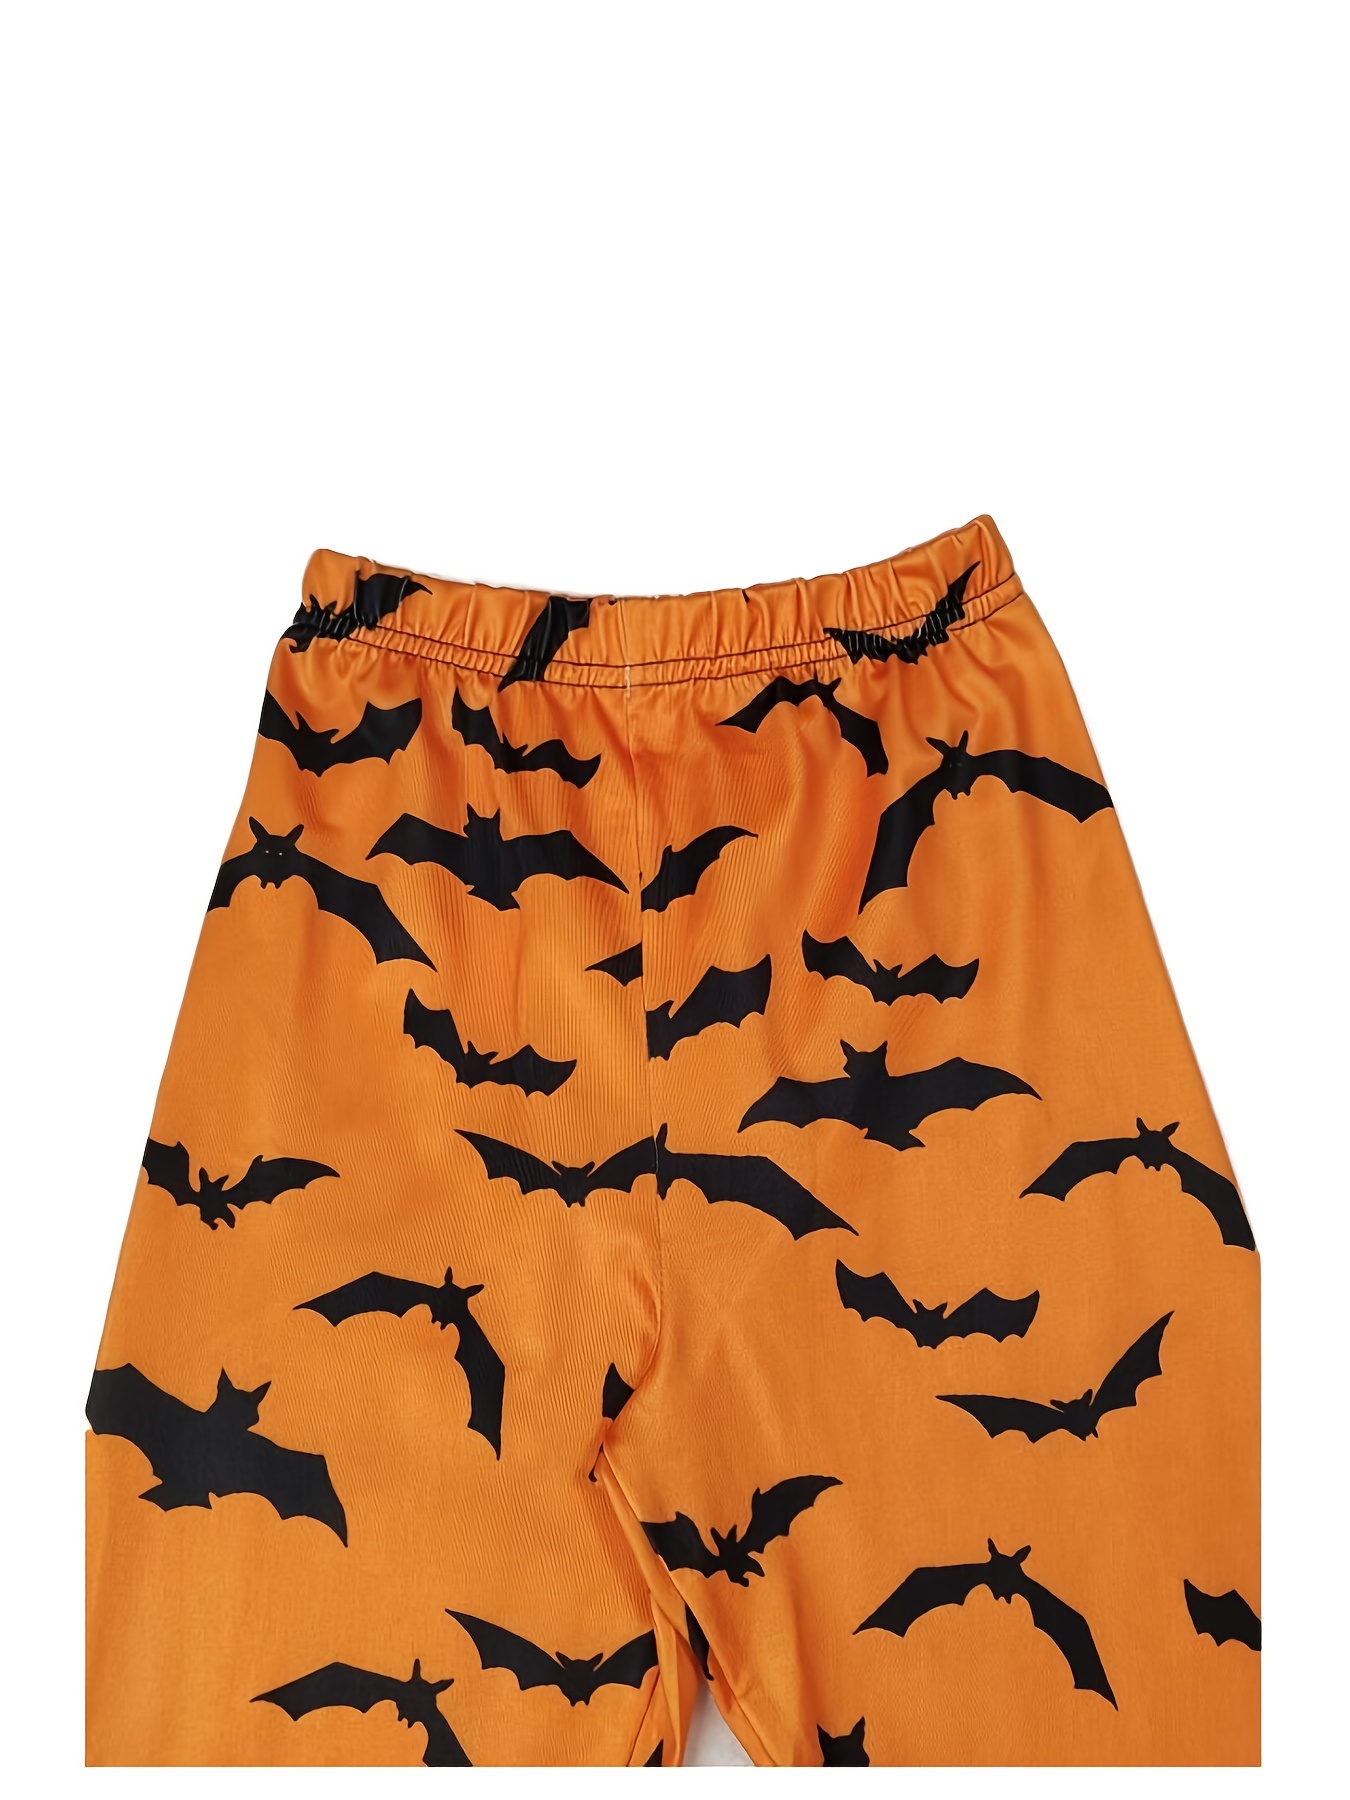 Size 4T Batman boys swim trunks  Boys swim trunks, Clothes design, Gym  shorts womens